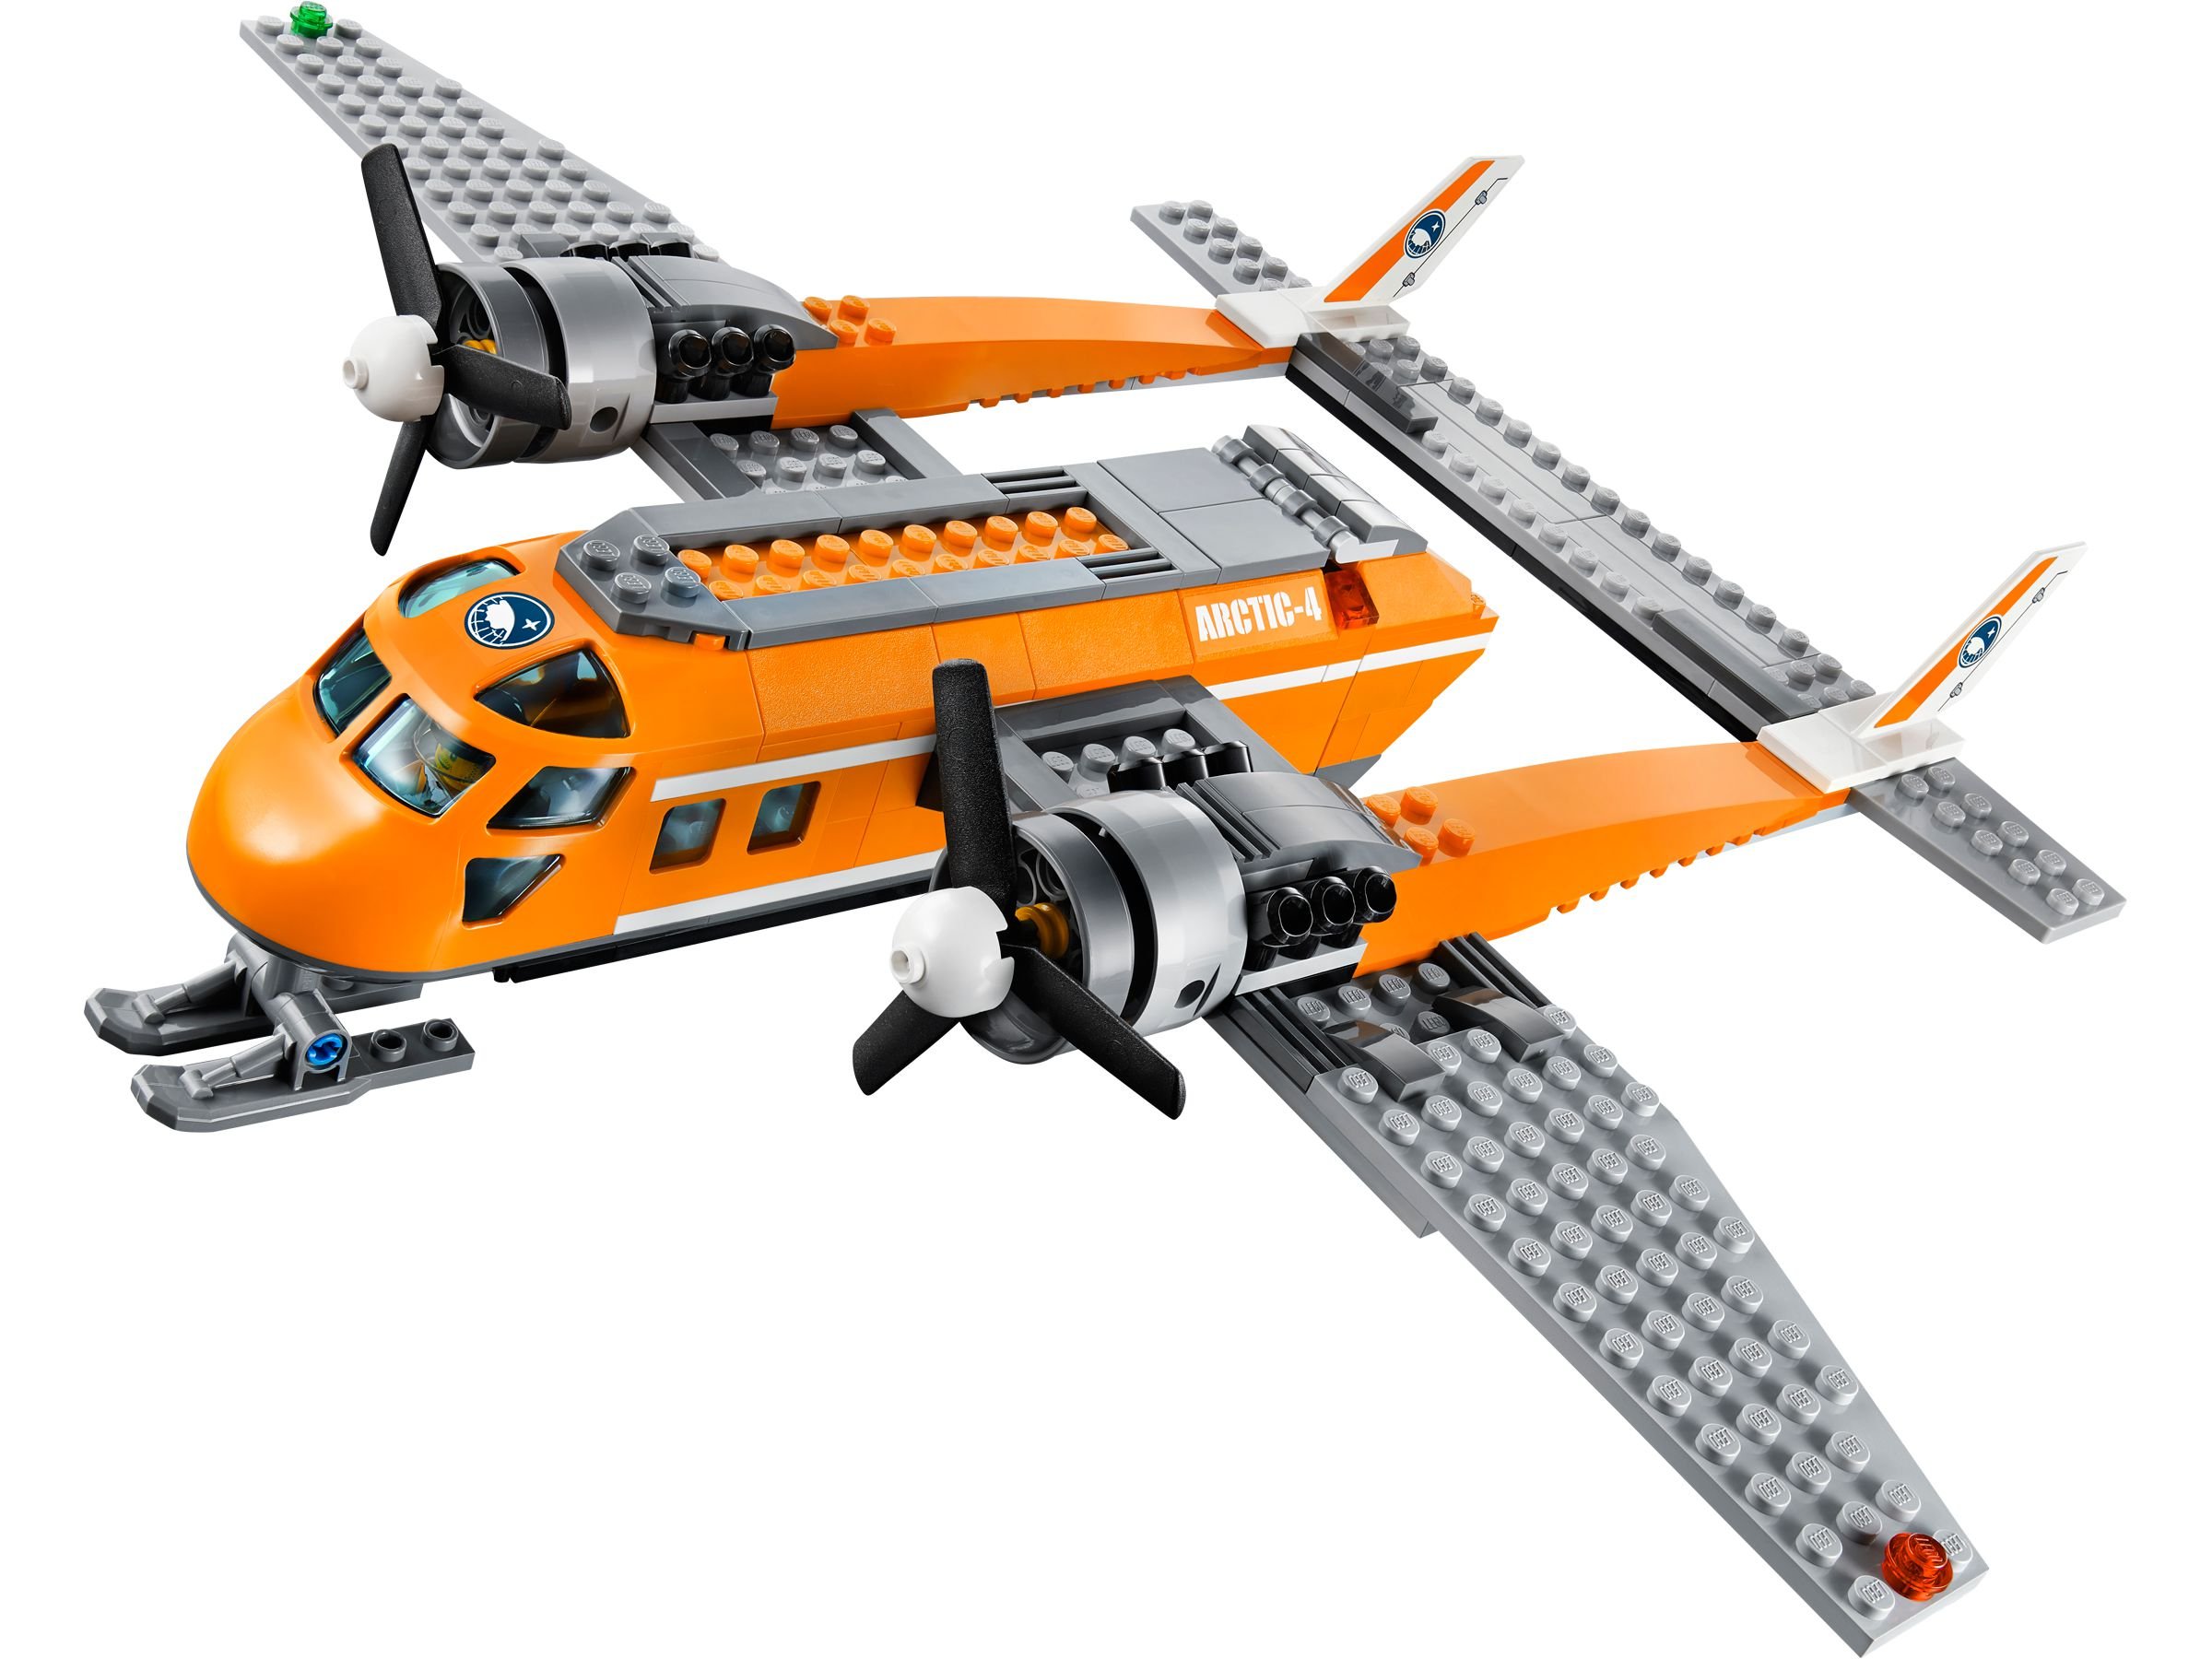 LEGO City 60064 Arktis-Versorgungsflugzeug LEGO_60064_alt2.jpg